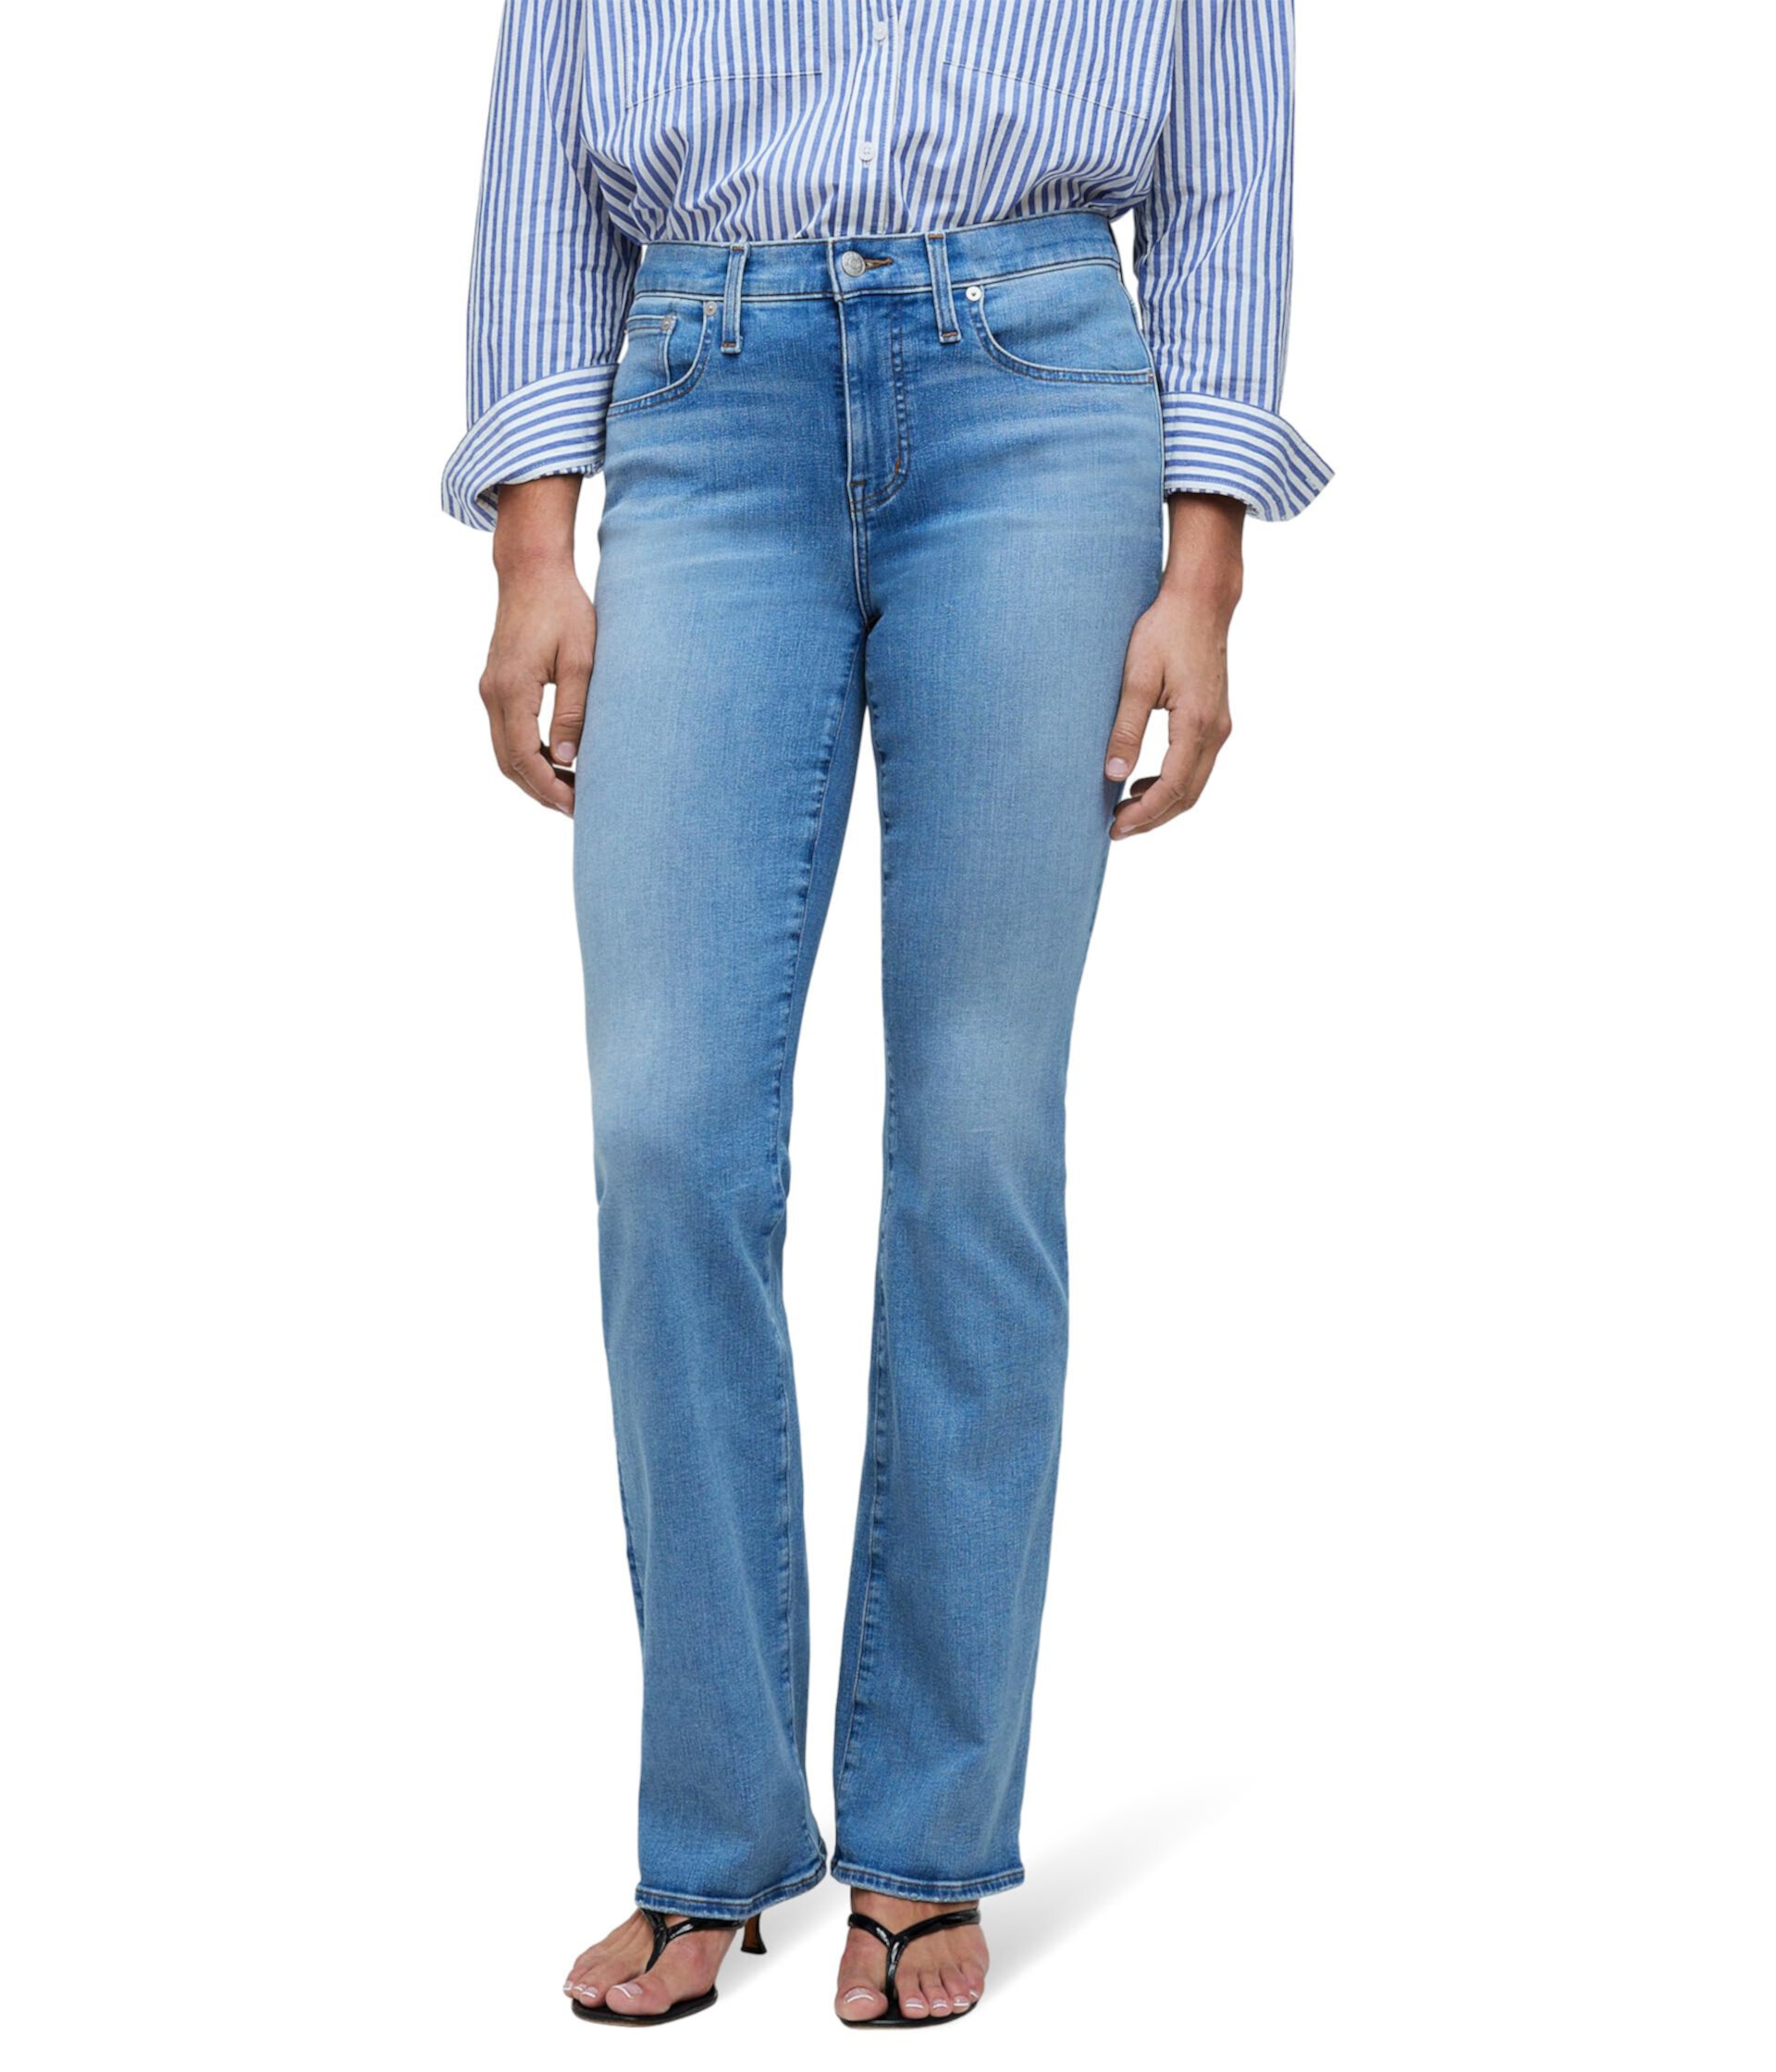 Полноразмерные джинсы Kick Out цвета Merrigan Wash: Crease Edition Madewell